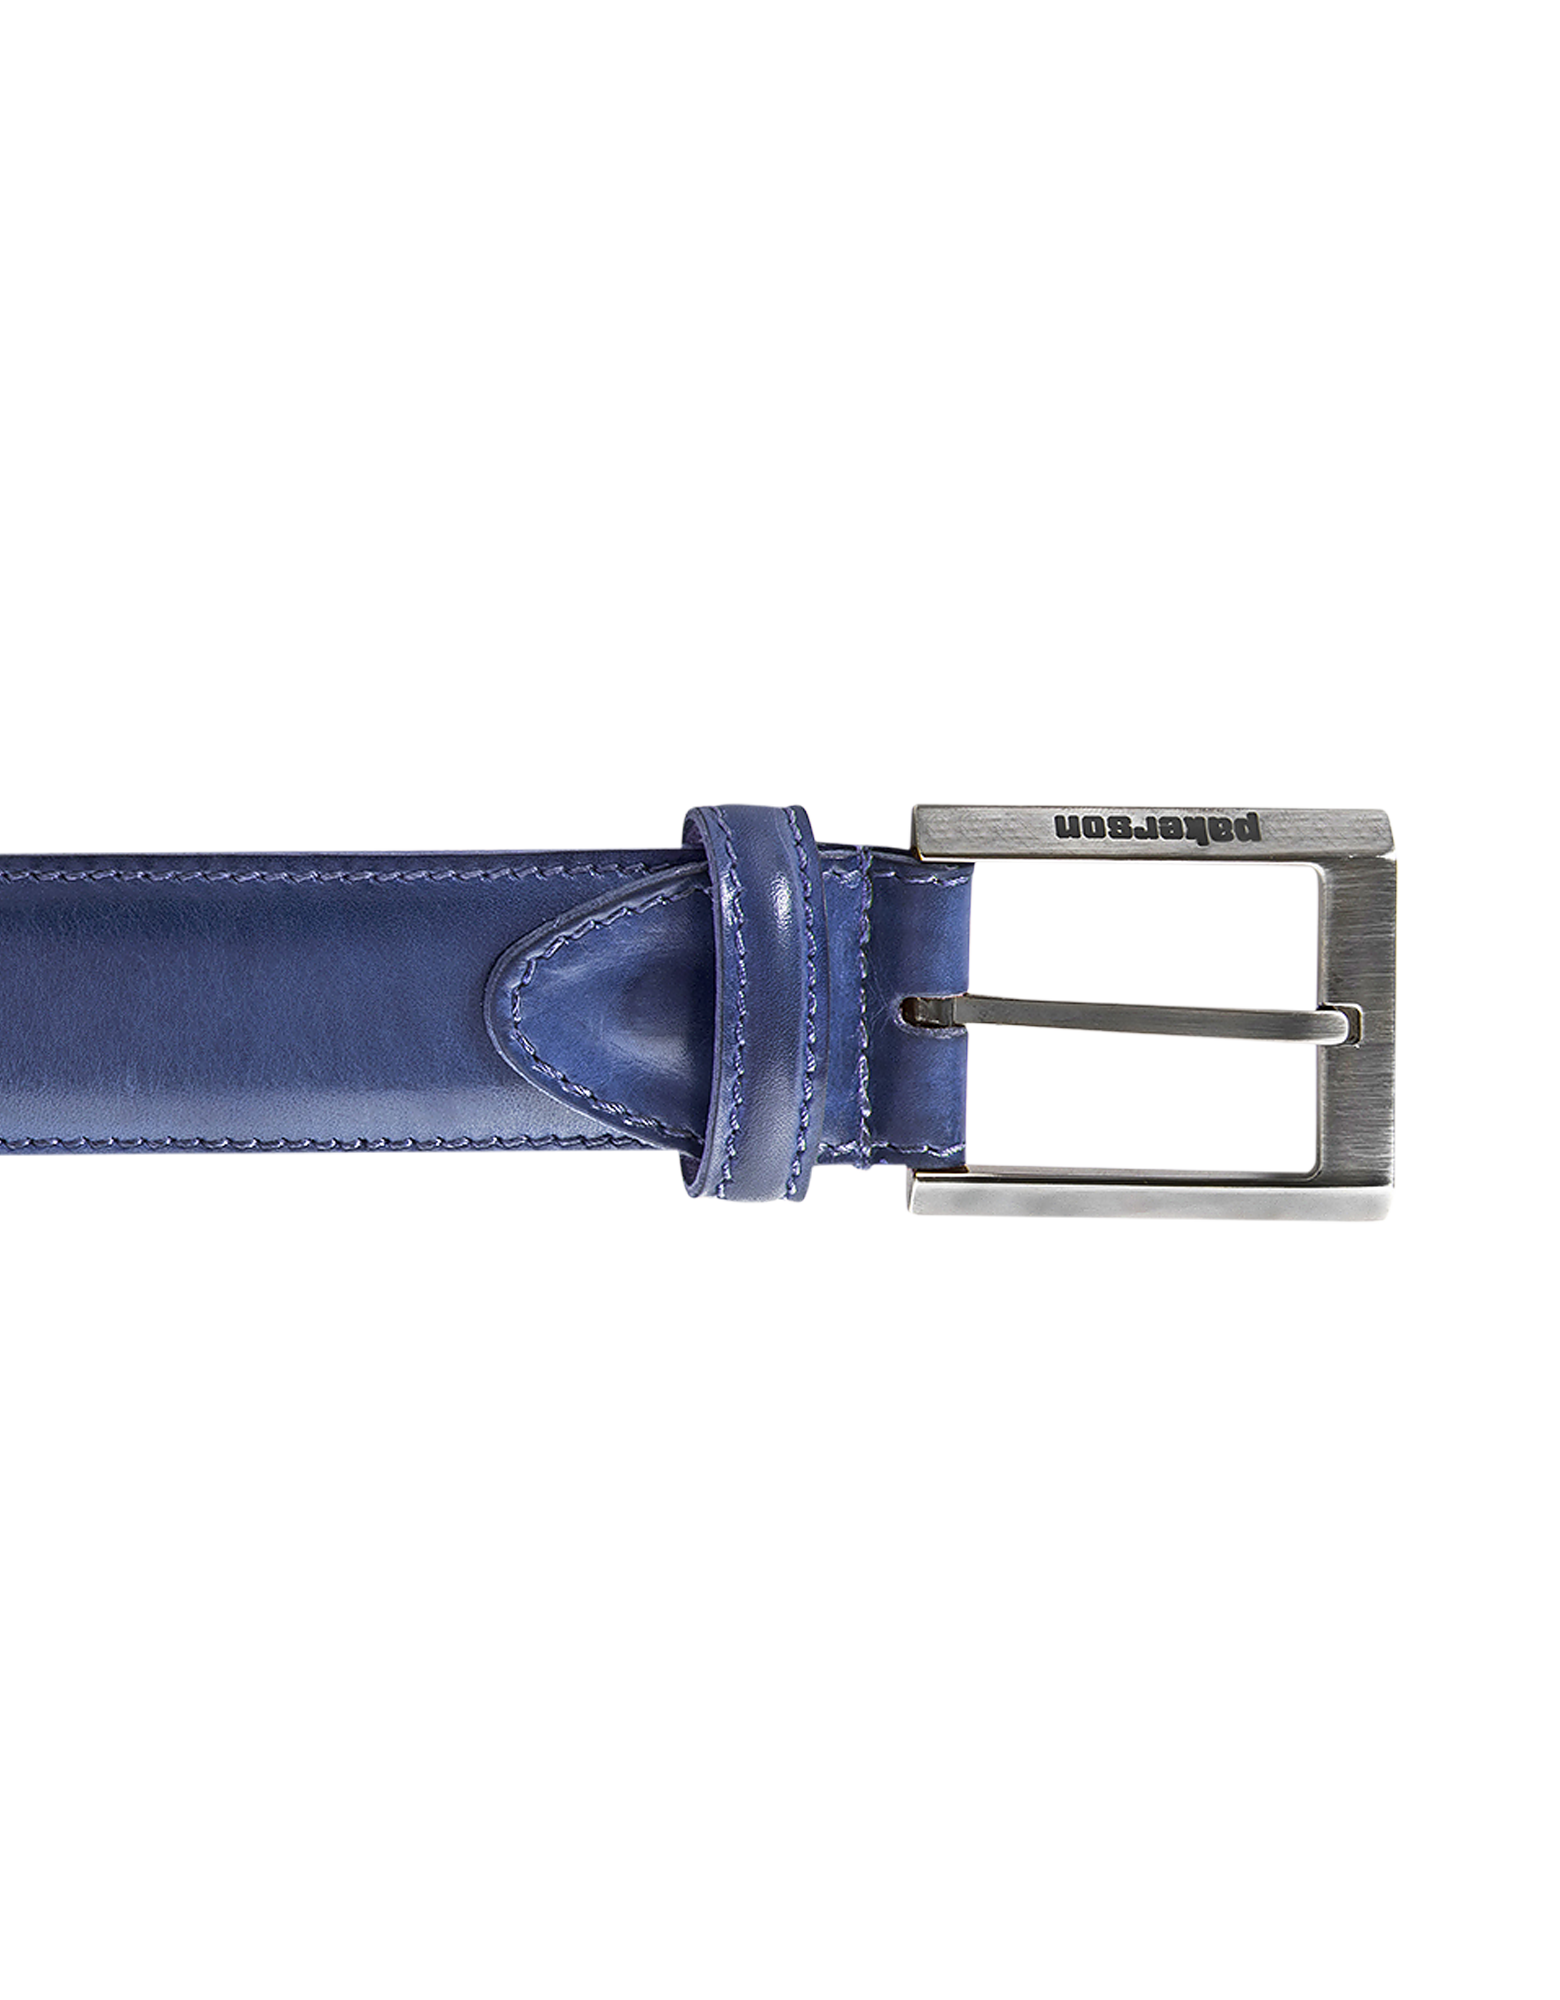 

Volterra Navy Blue Handmade Italian Leather Belt